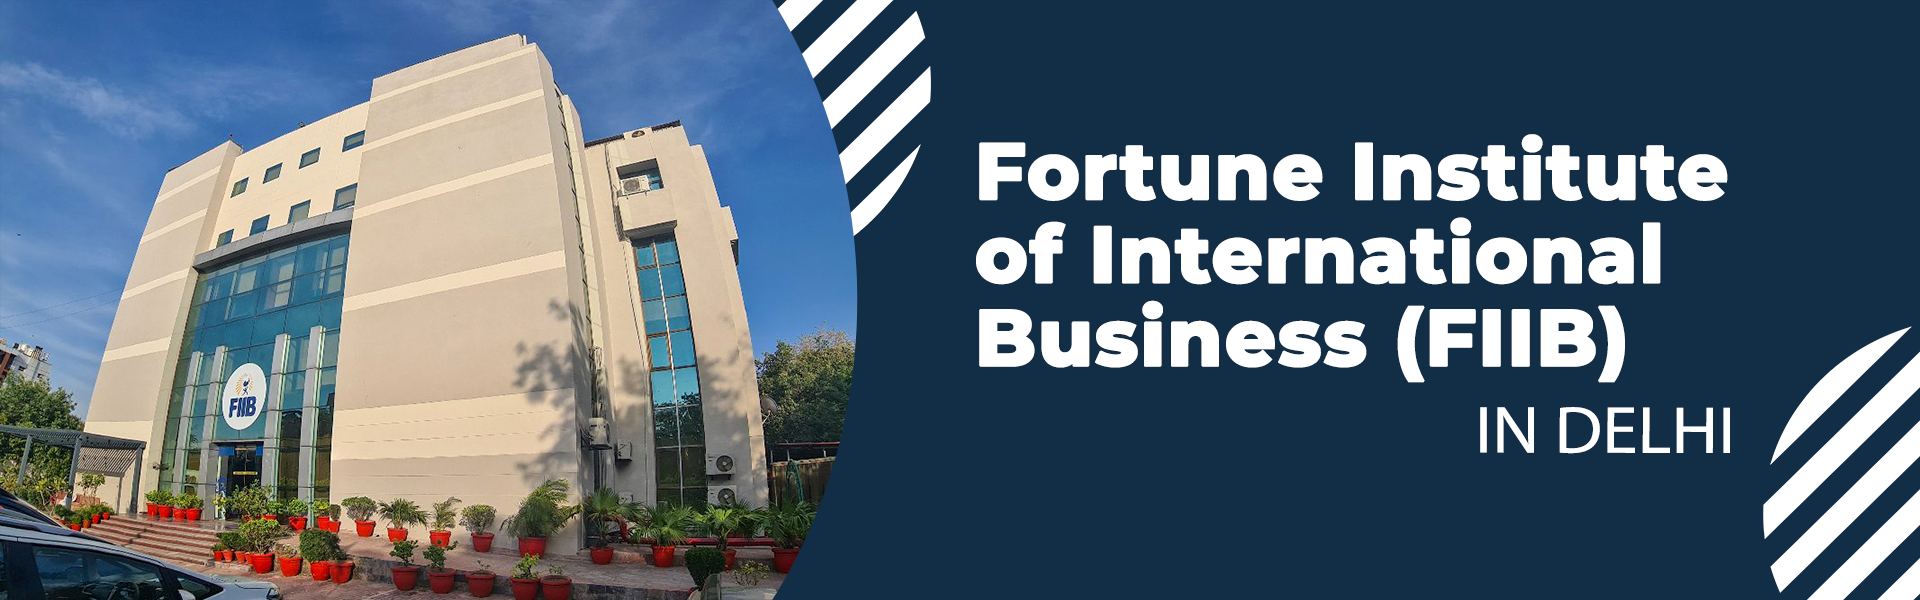 Fortune Institute of International Business (FIIB) New Delhi